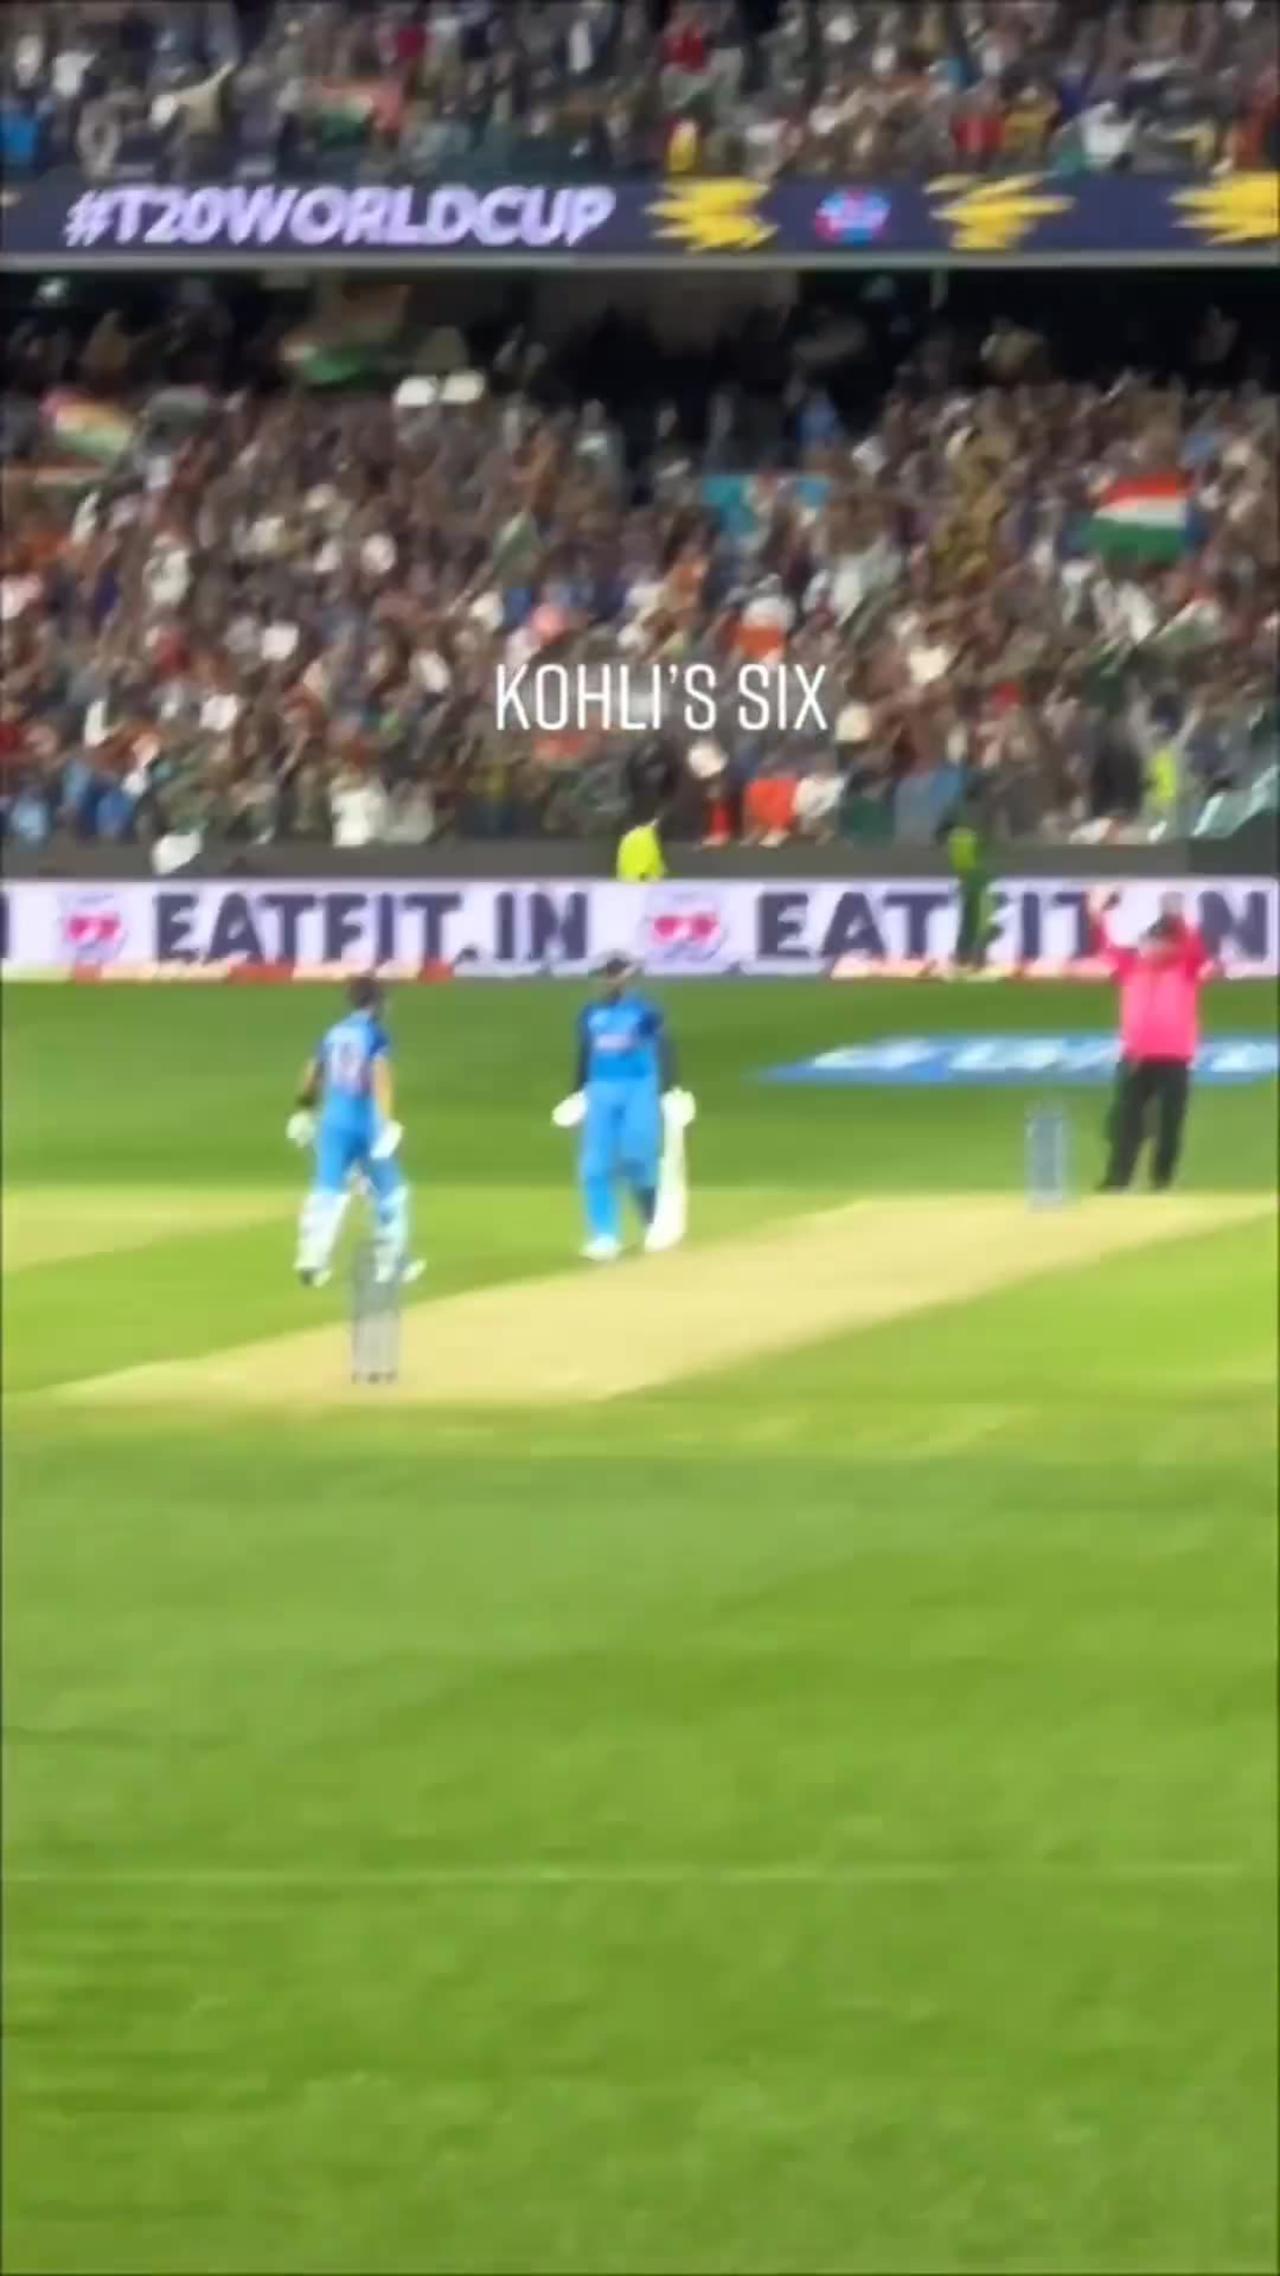 Virat Kohli six against Haris Rauf in world cup